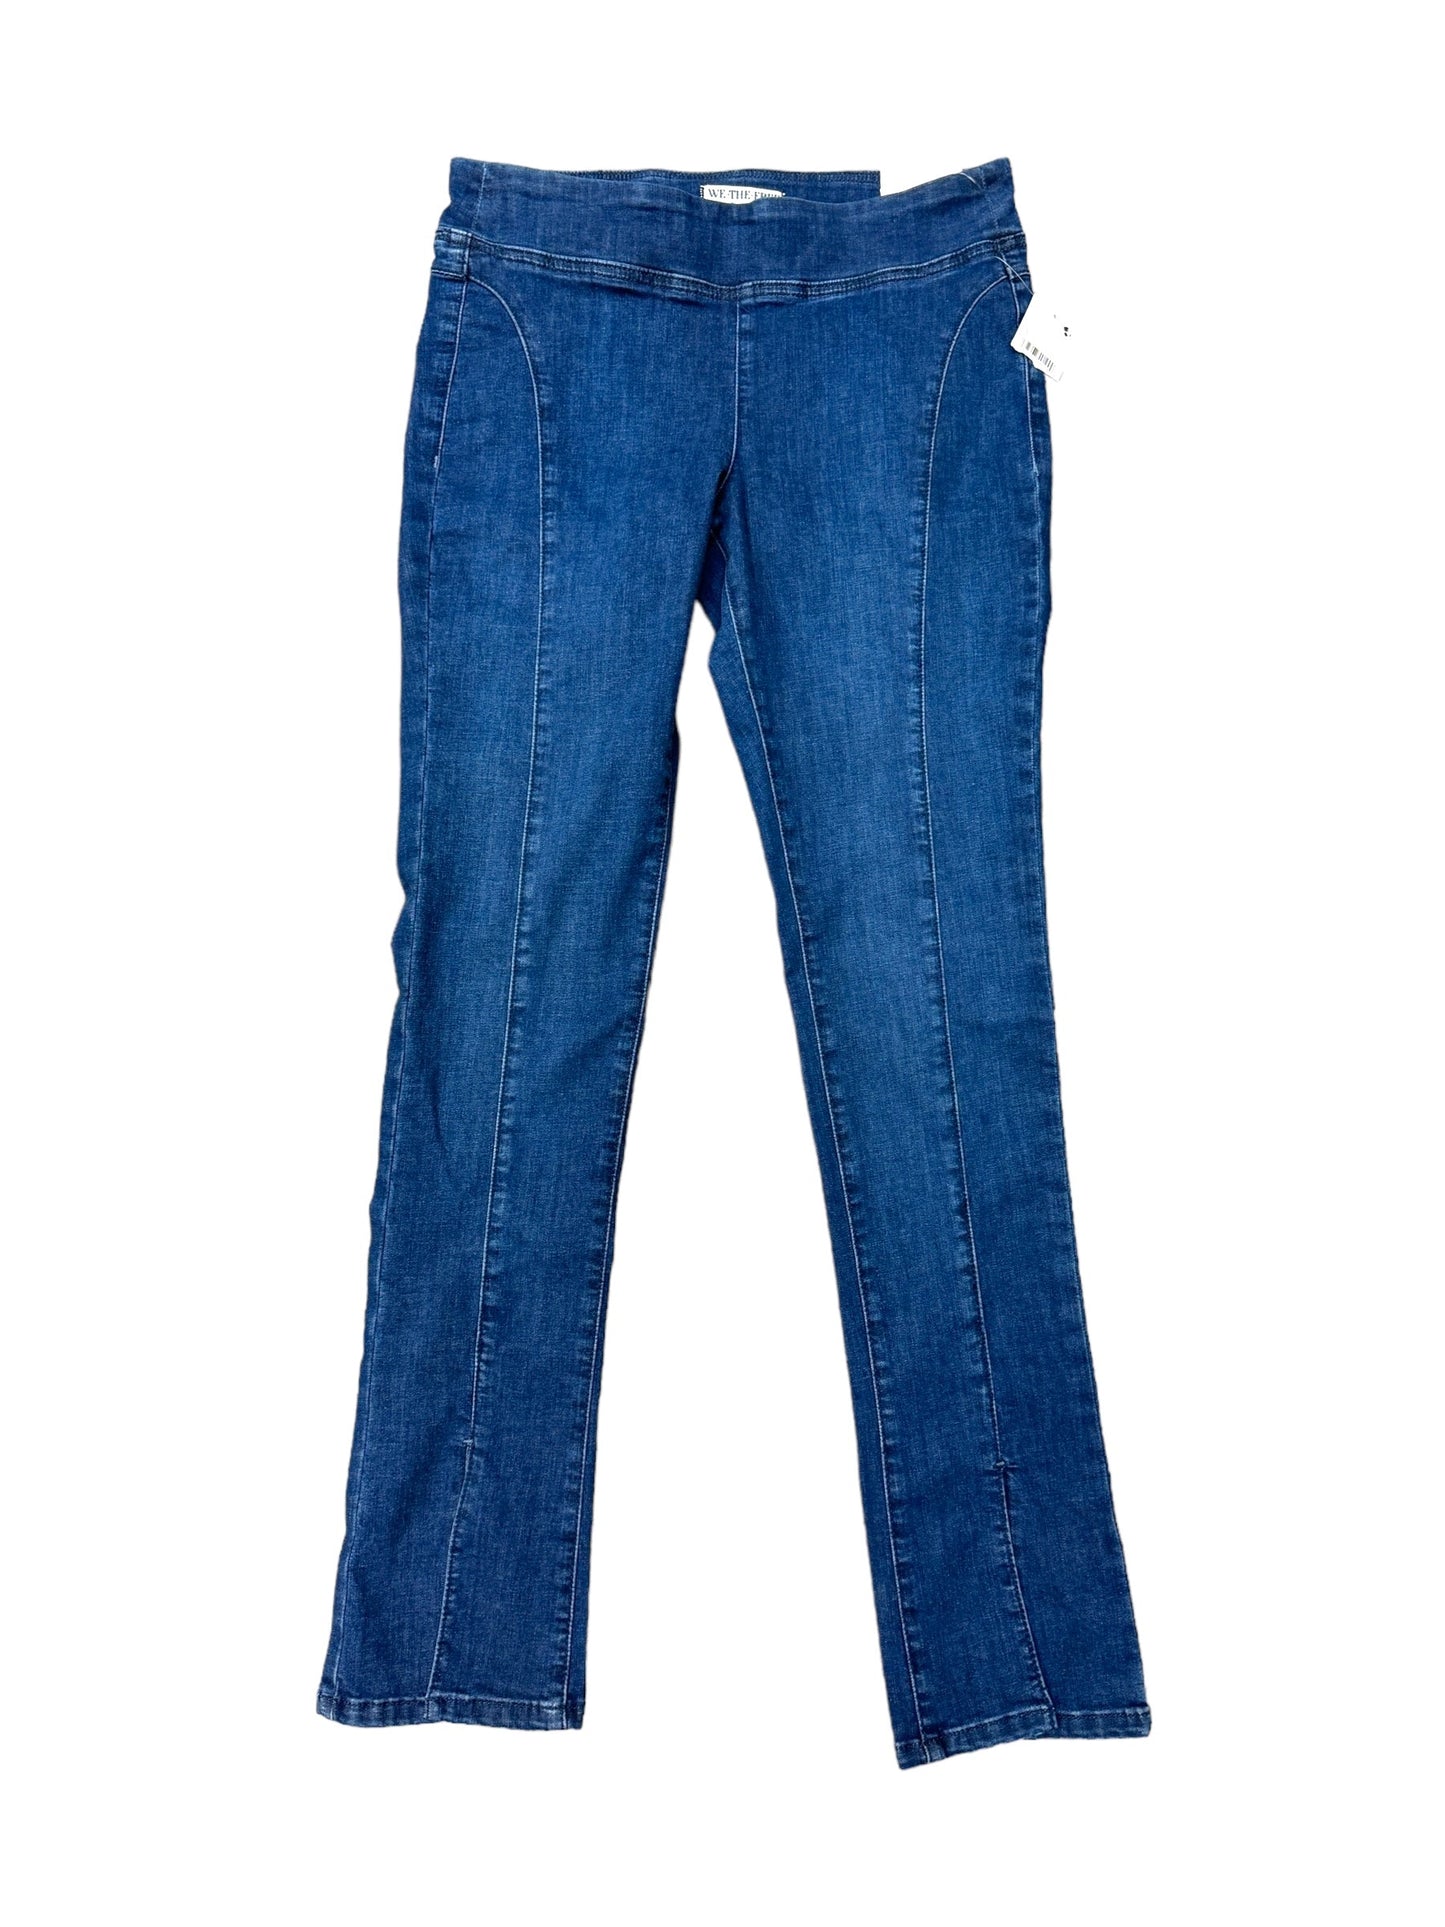 Blue Denim Jeans Skinny We The Free, Size 4